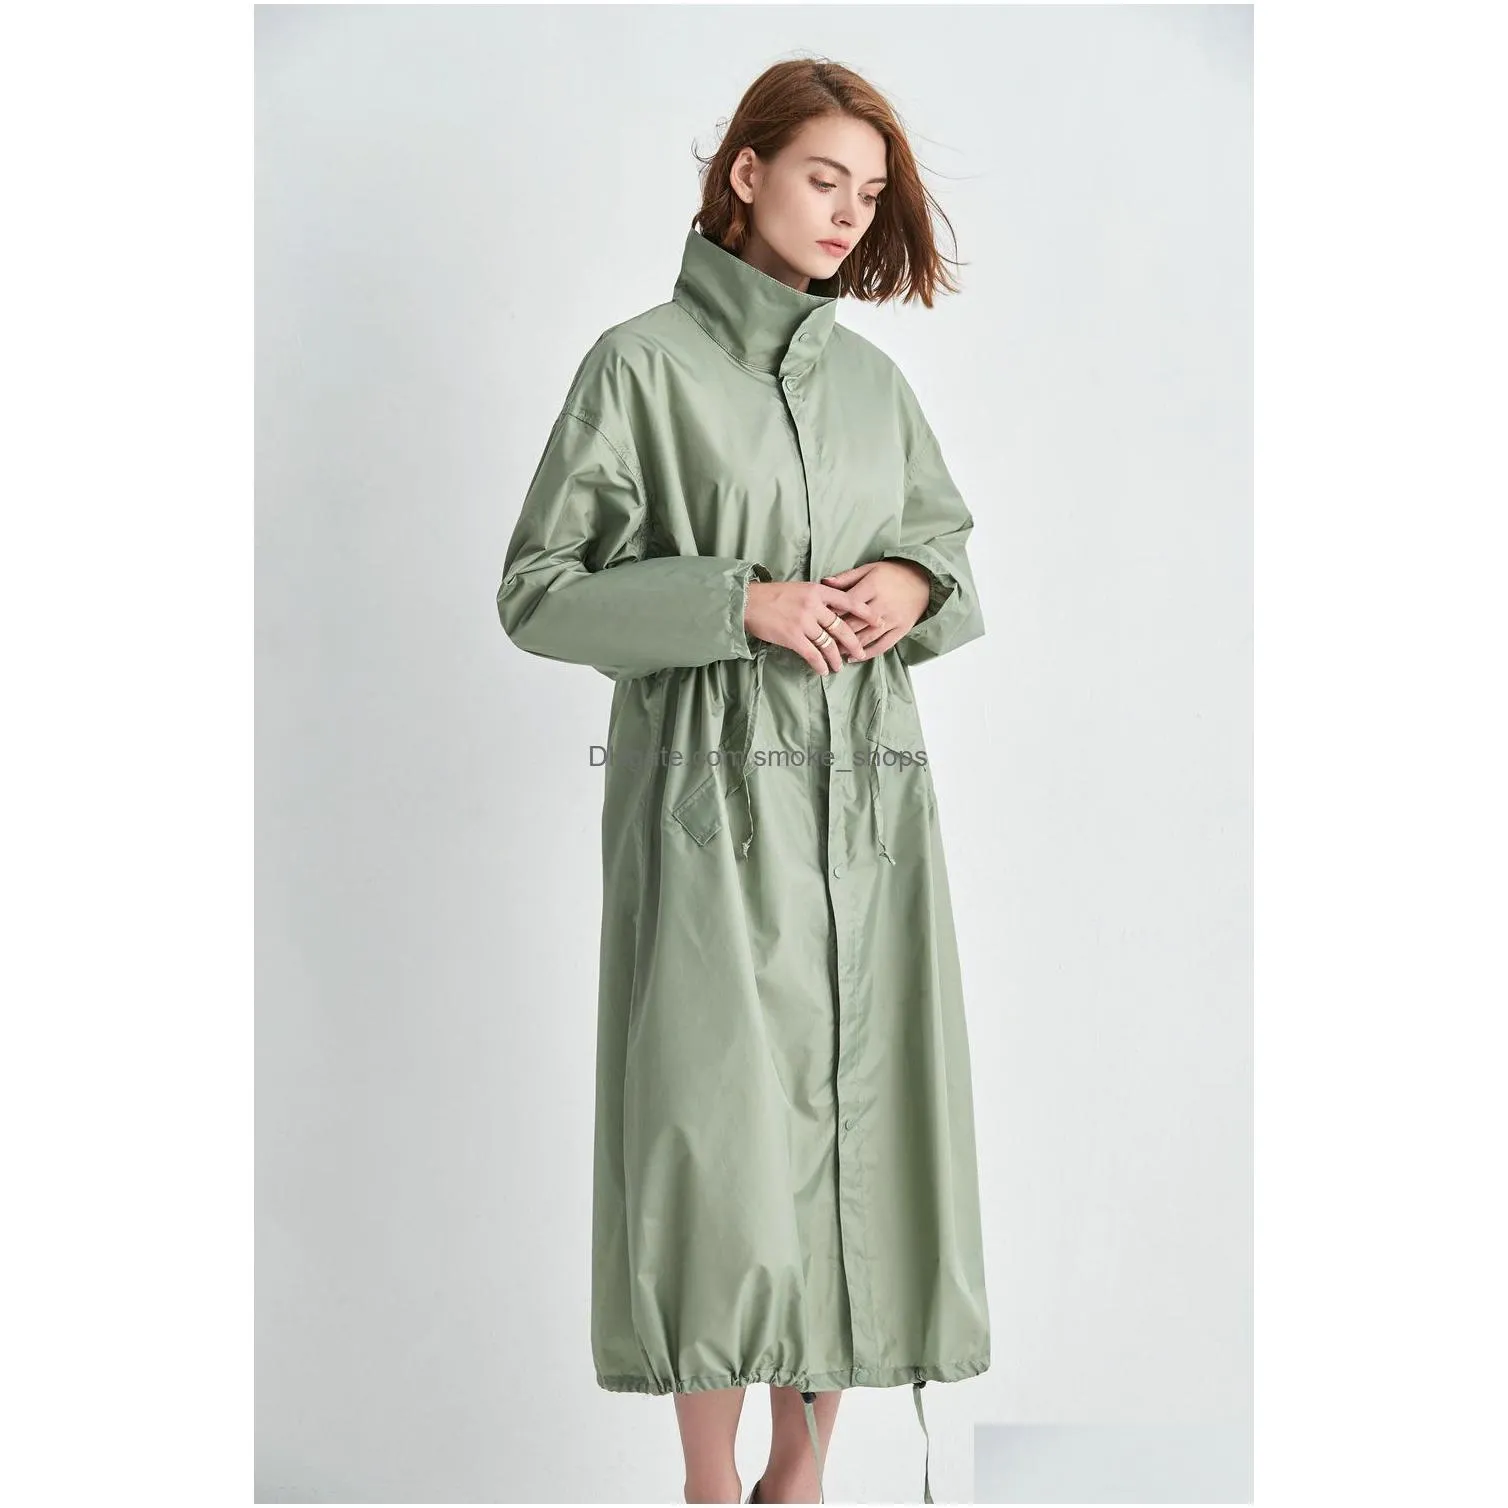 long thin raincoat men women/female ponchos waterproof pullover womens breathable rain coat jacket chubasquero mujer 210320